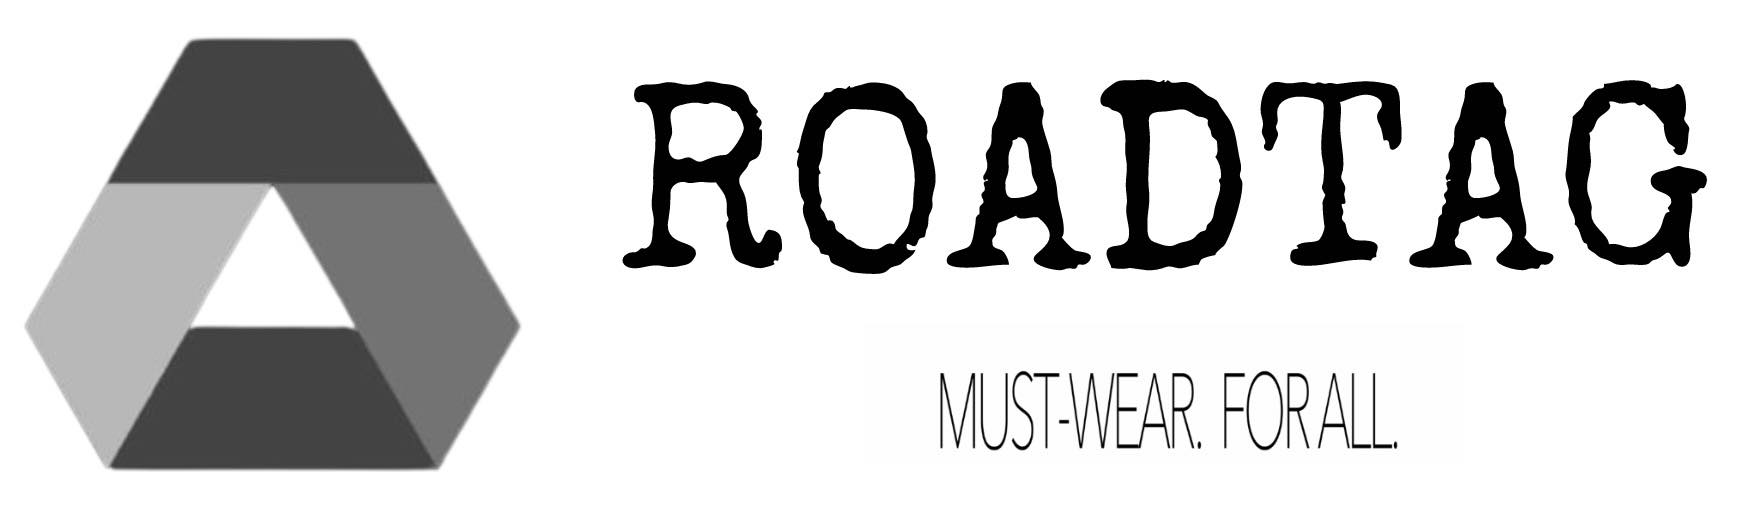 Roadtag Logo